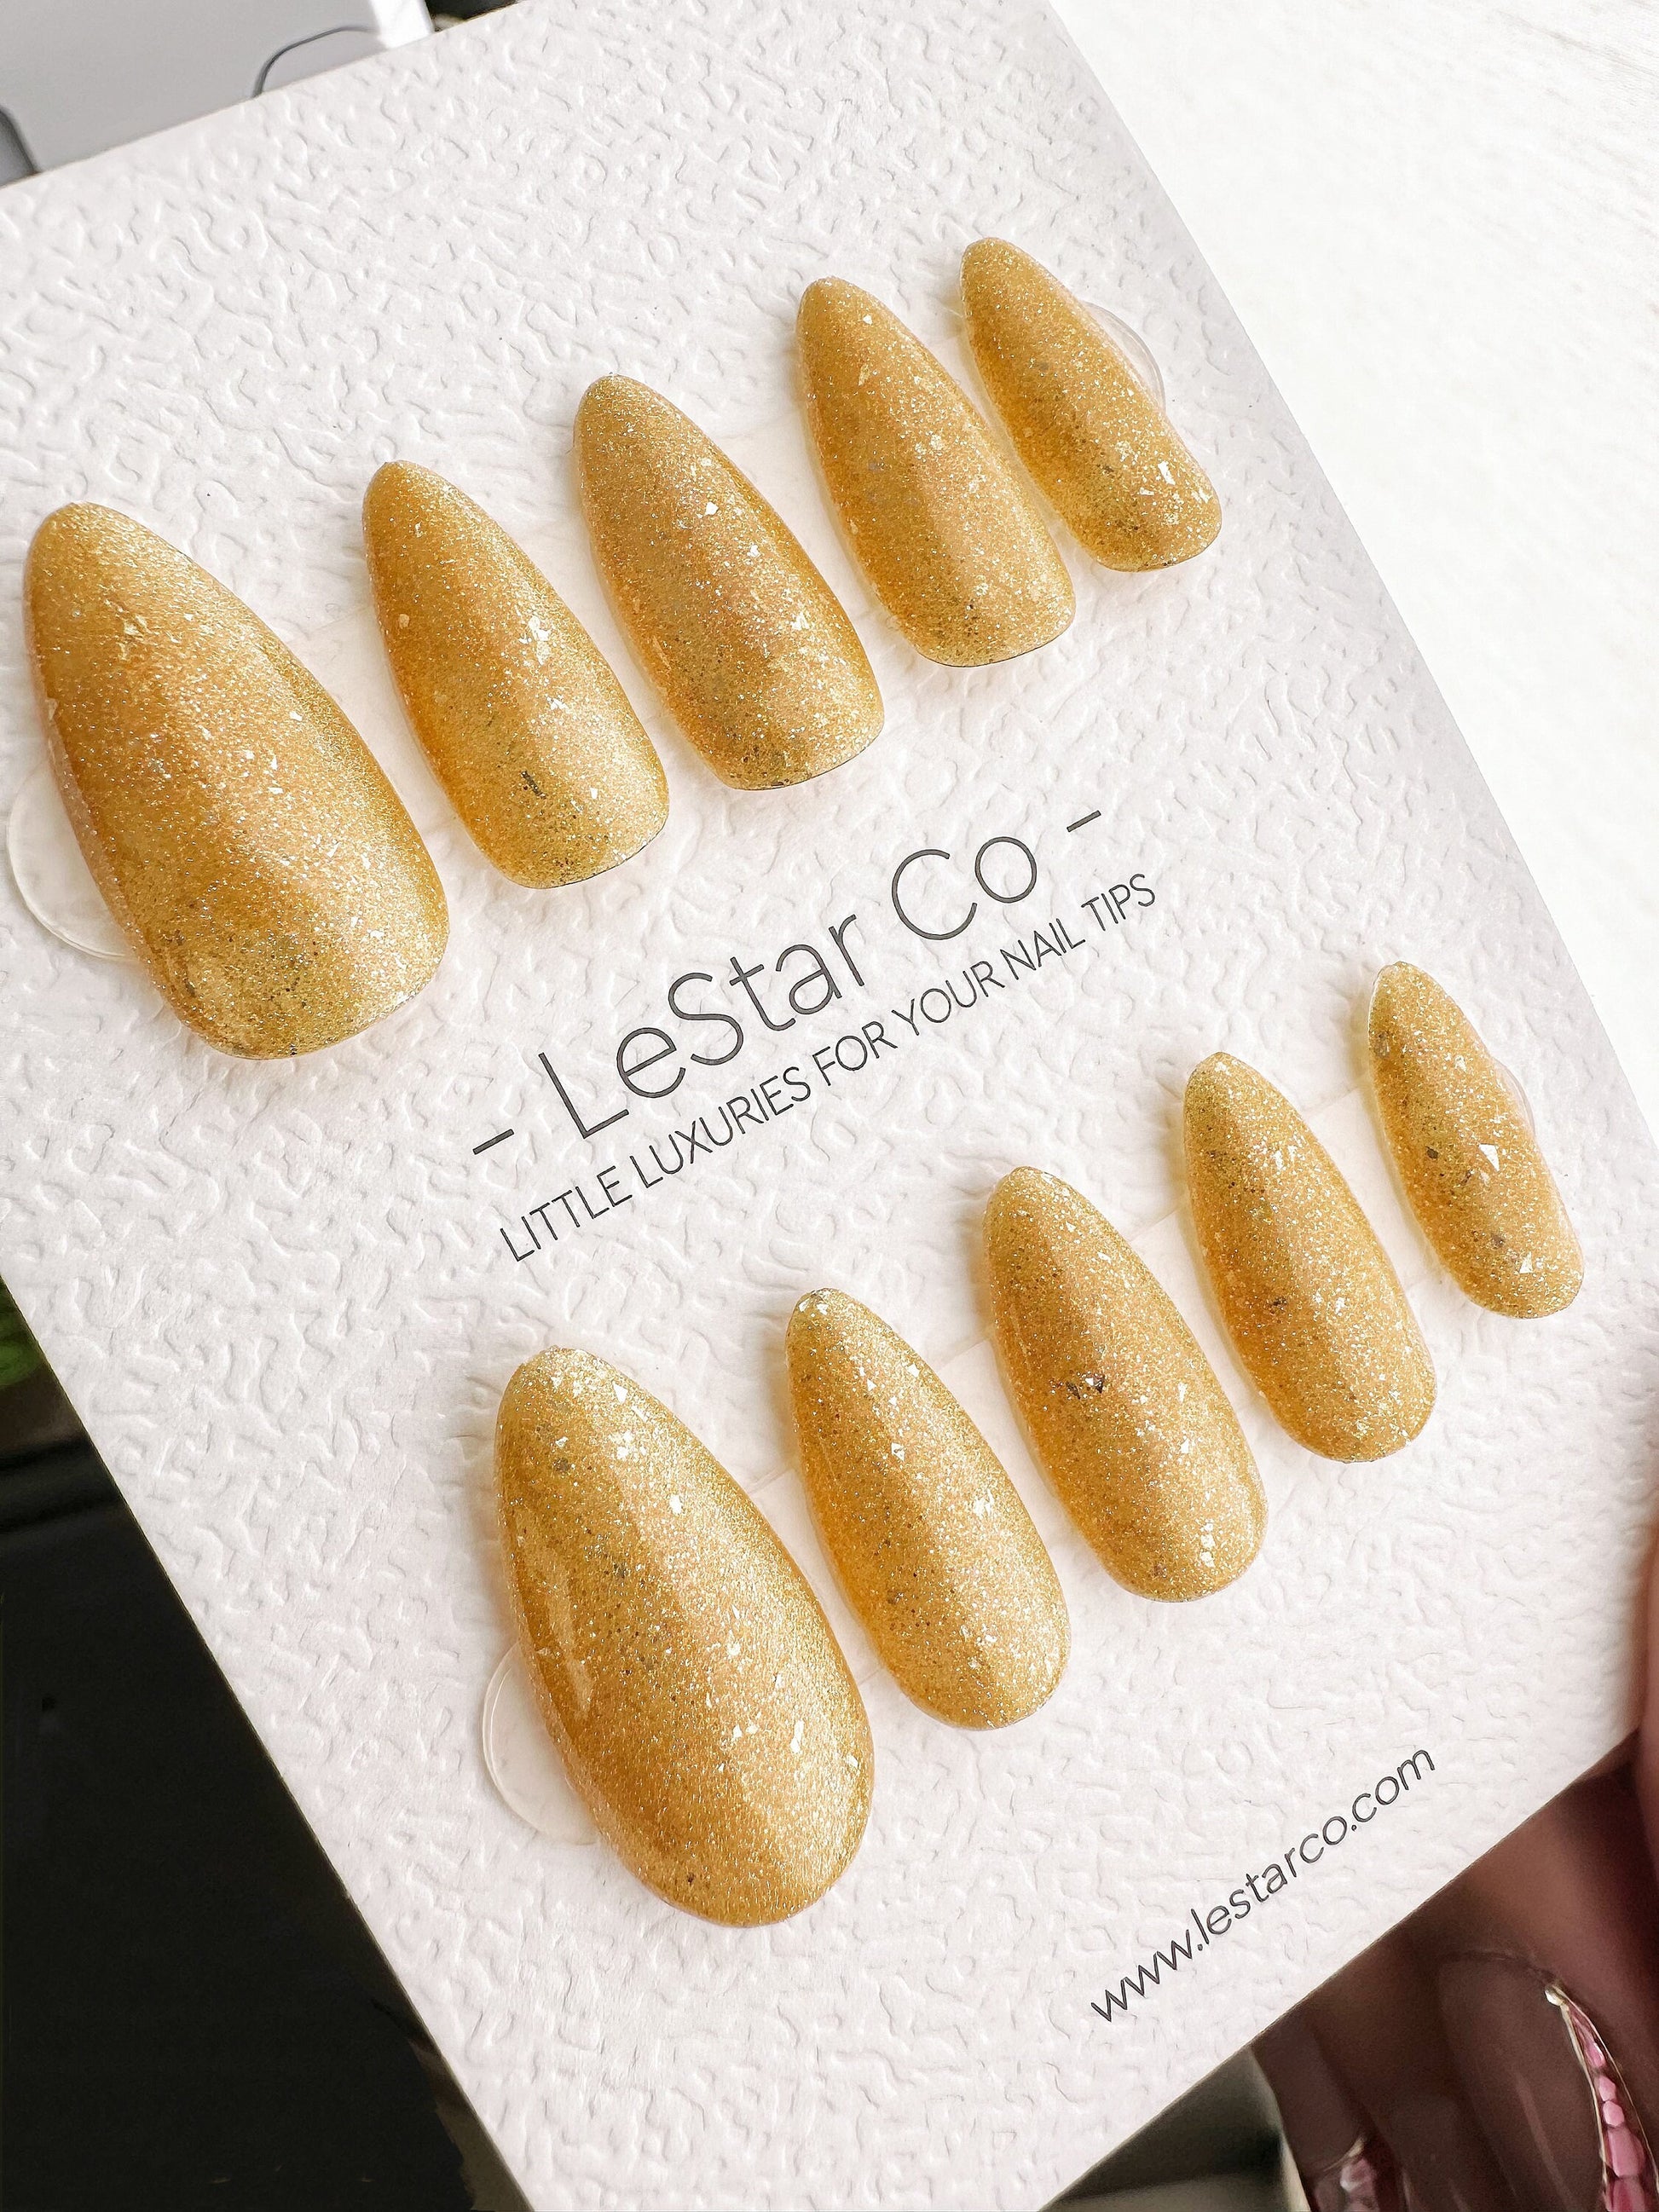 Reusable Honeycomb Orange Cat eye | Nails Premium Press on Nails Gel Manicure | Fake Nails | Handmade | Lestarco faux nails 437zz